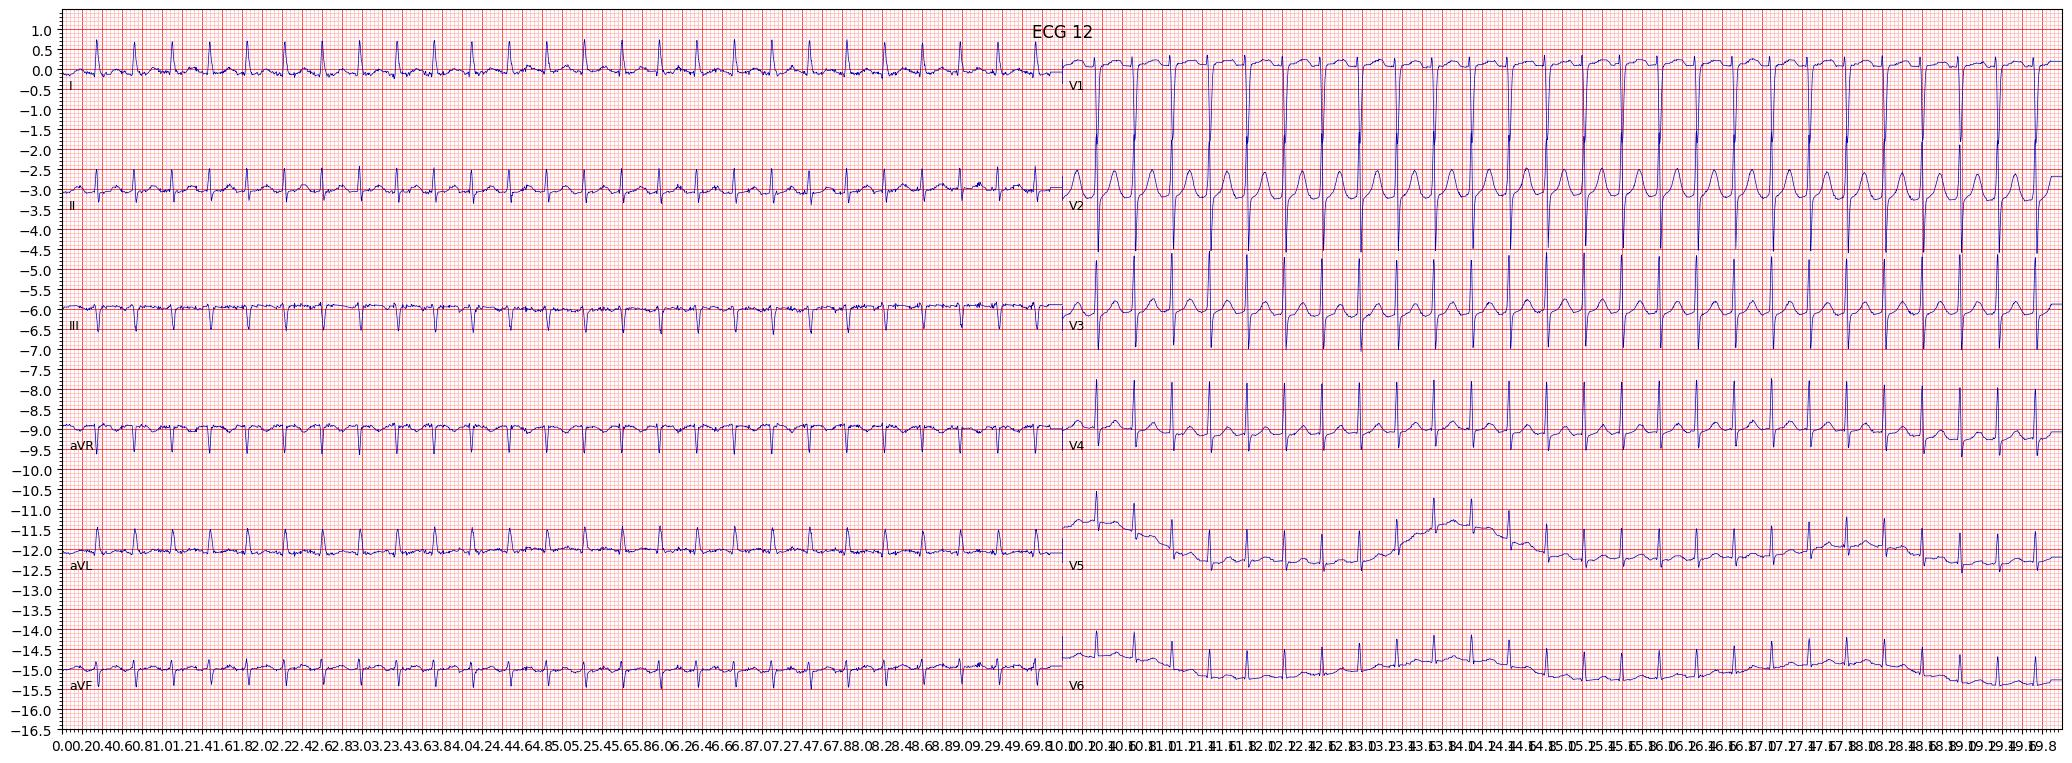 paroxysmal supraventricular tachycardia (PSVT) example 9866